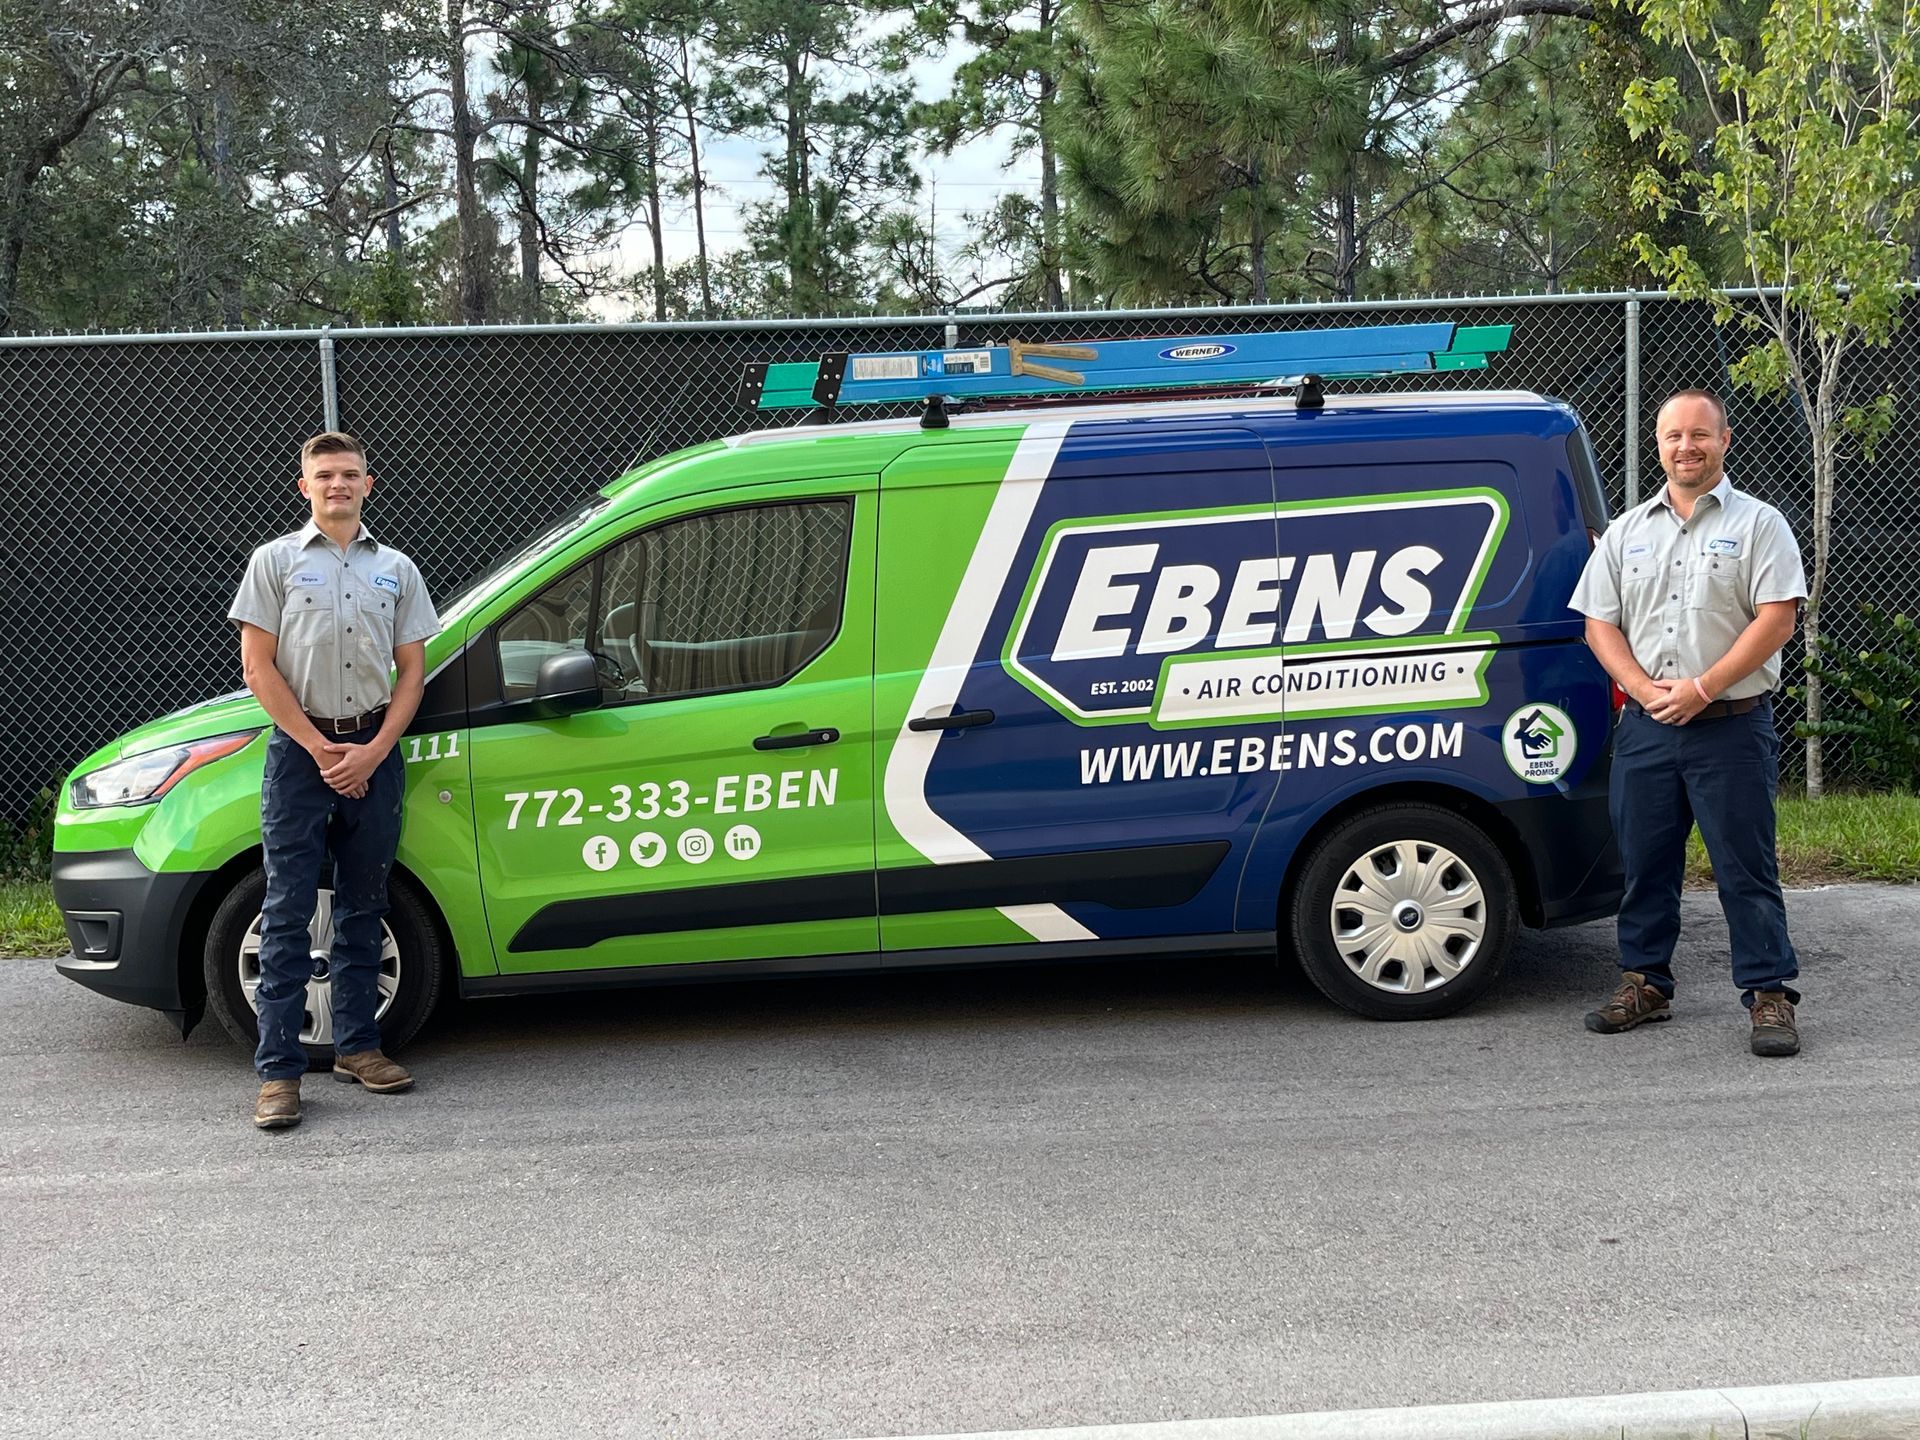 Ebens HVAC technicians standing next to service vehicle